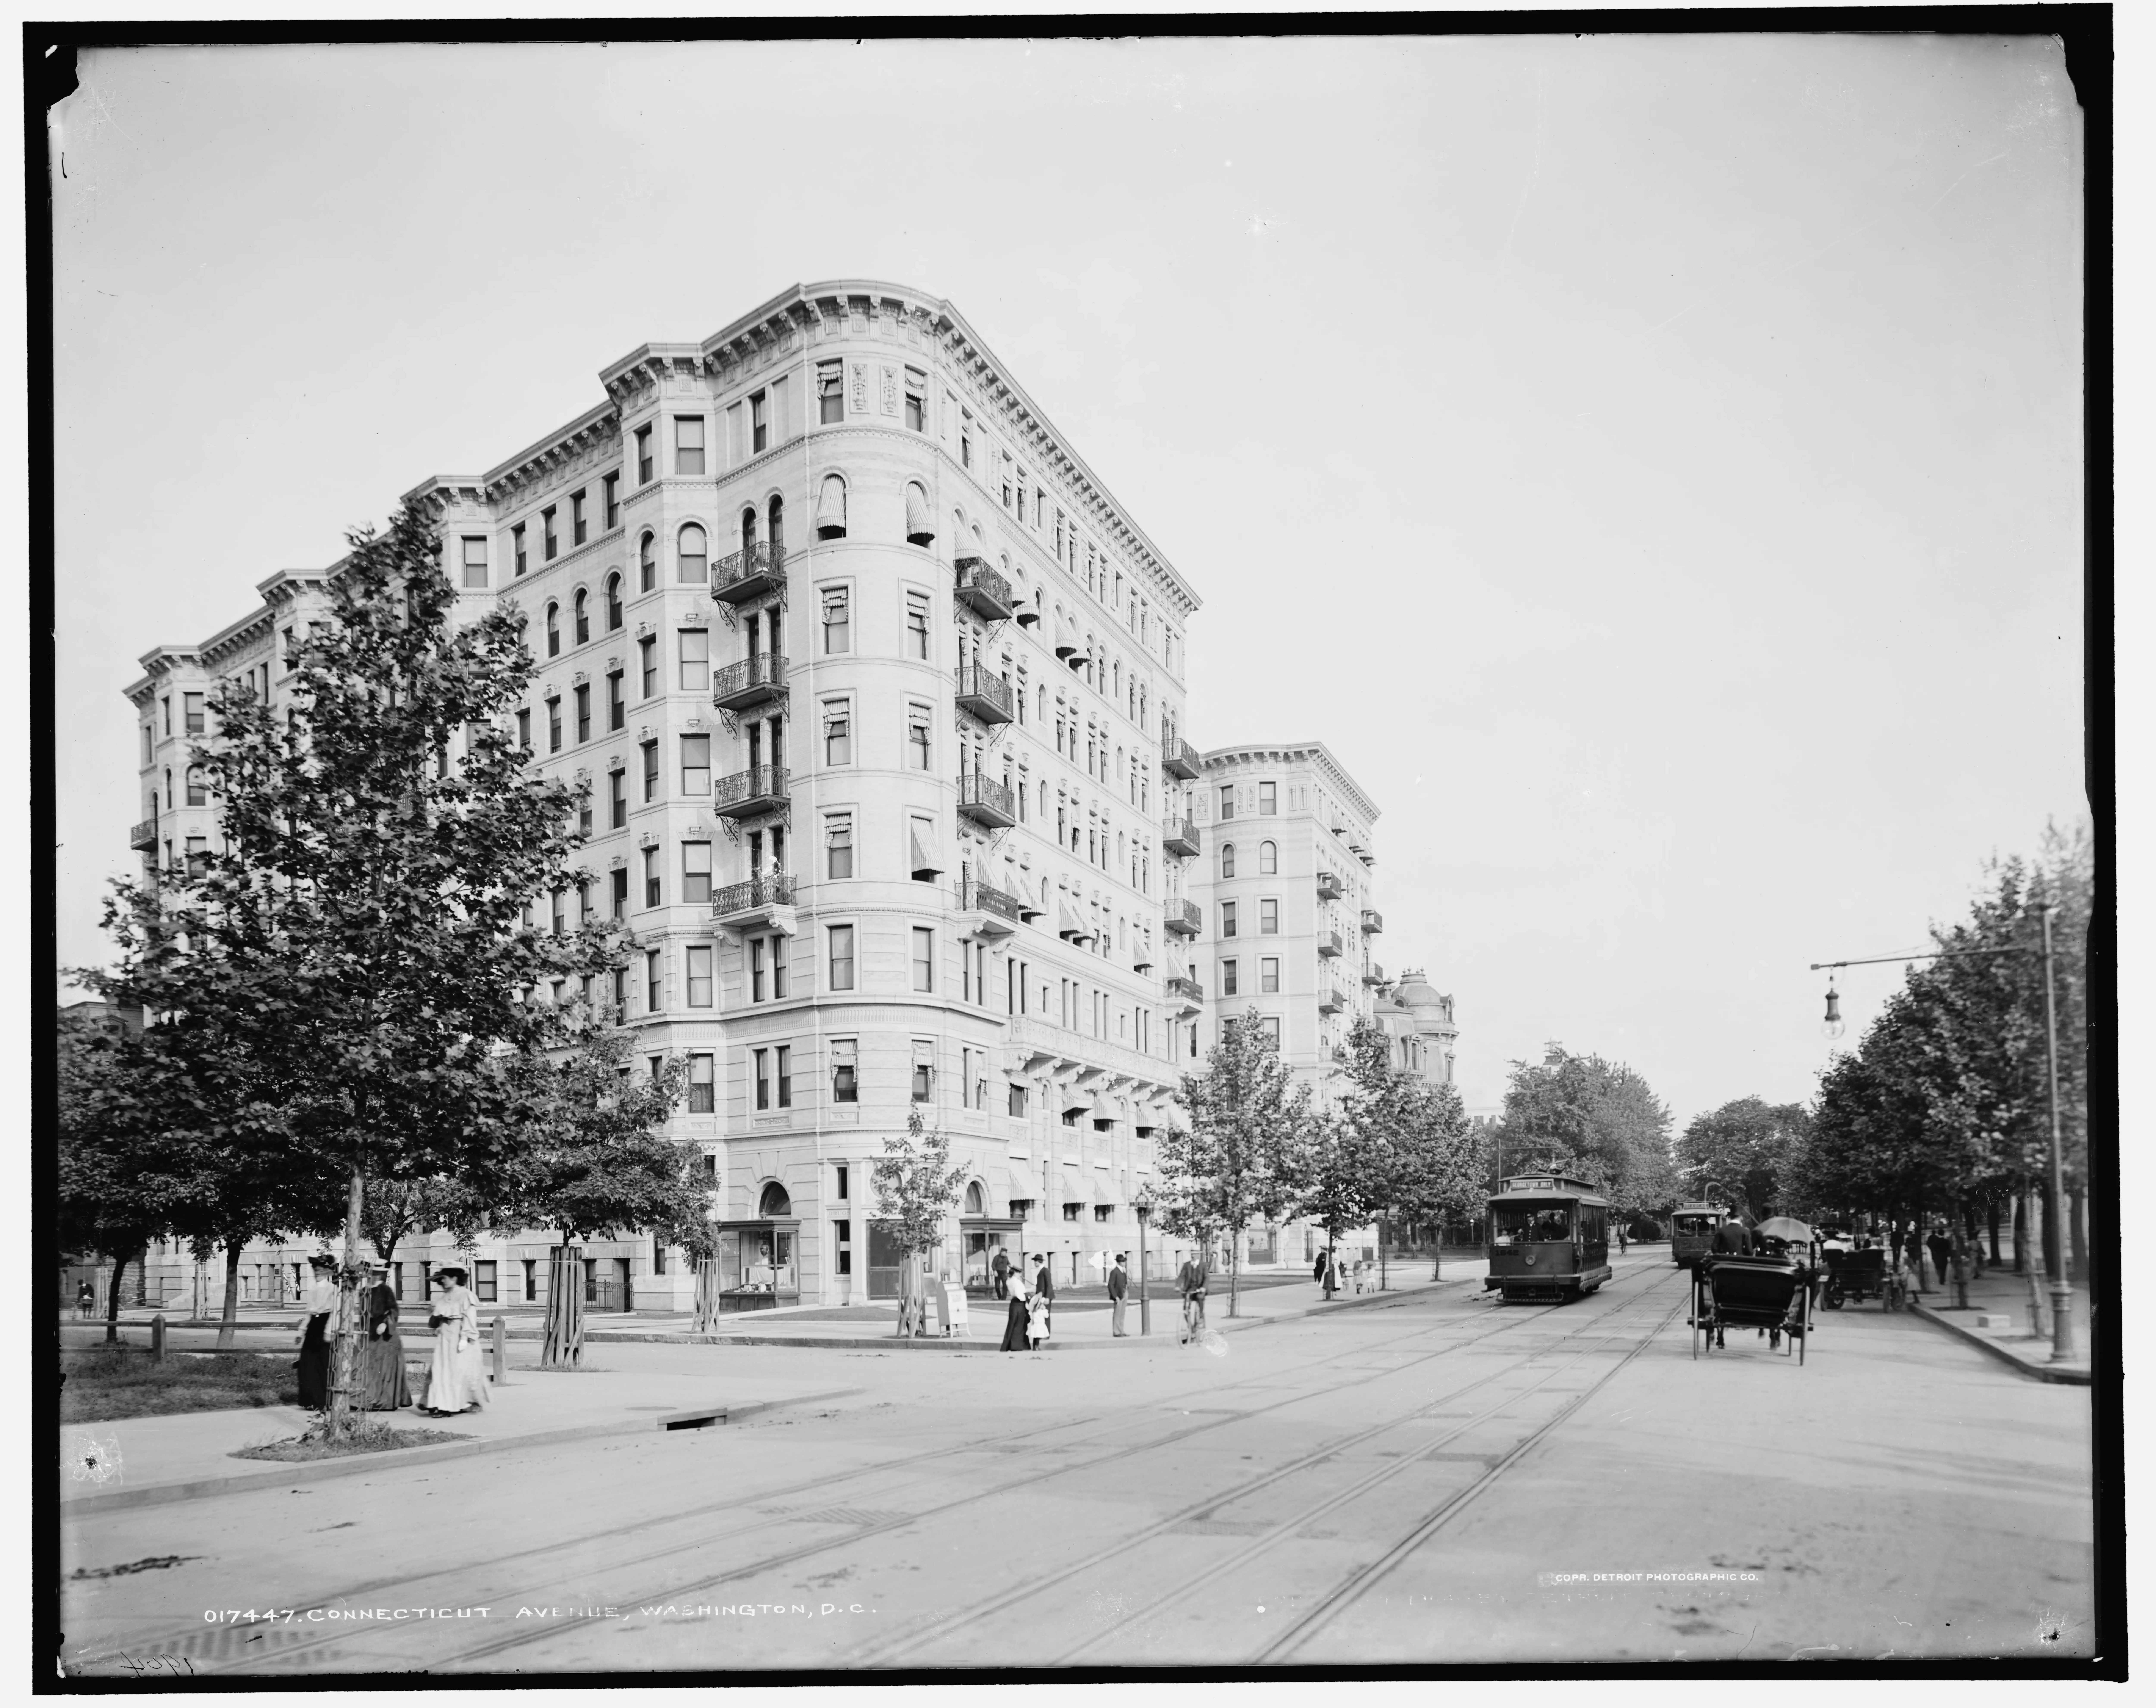 Connecticut Avenue in 1904